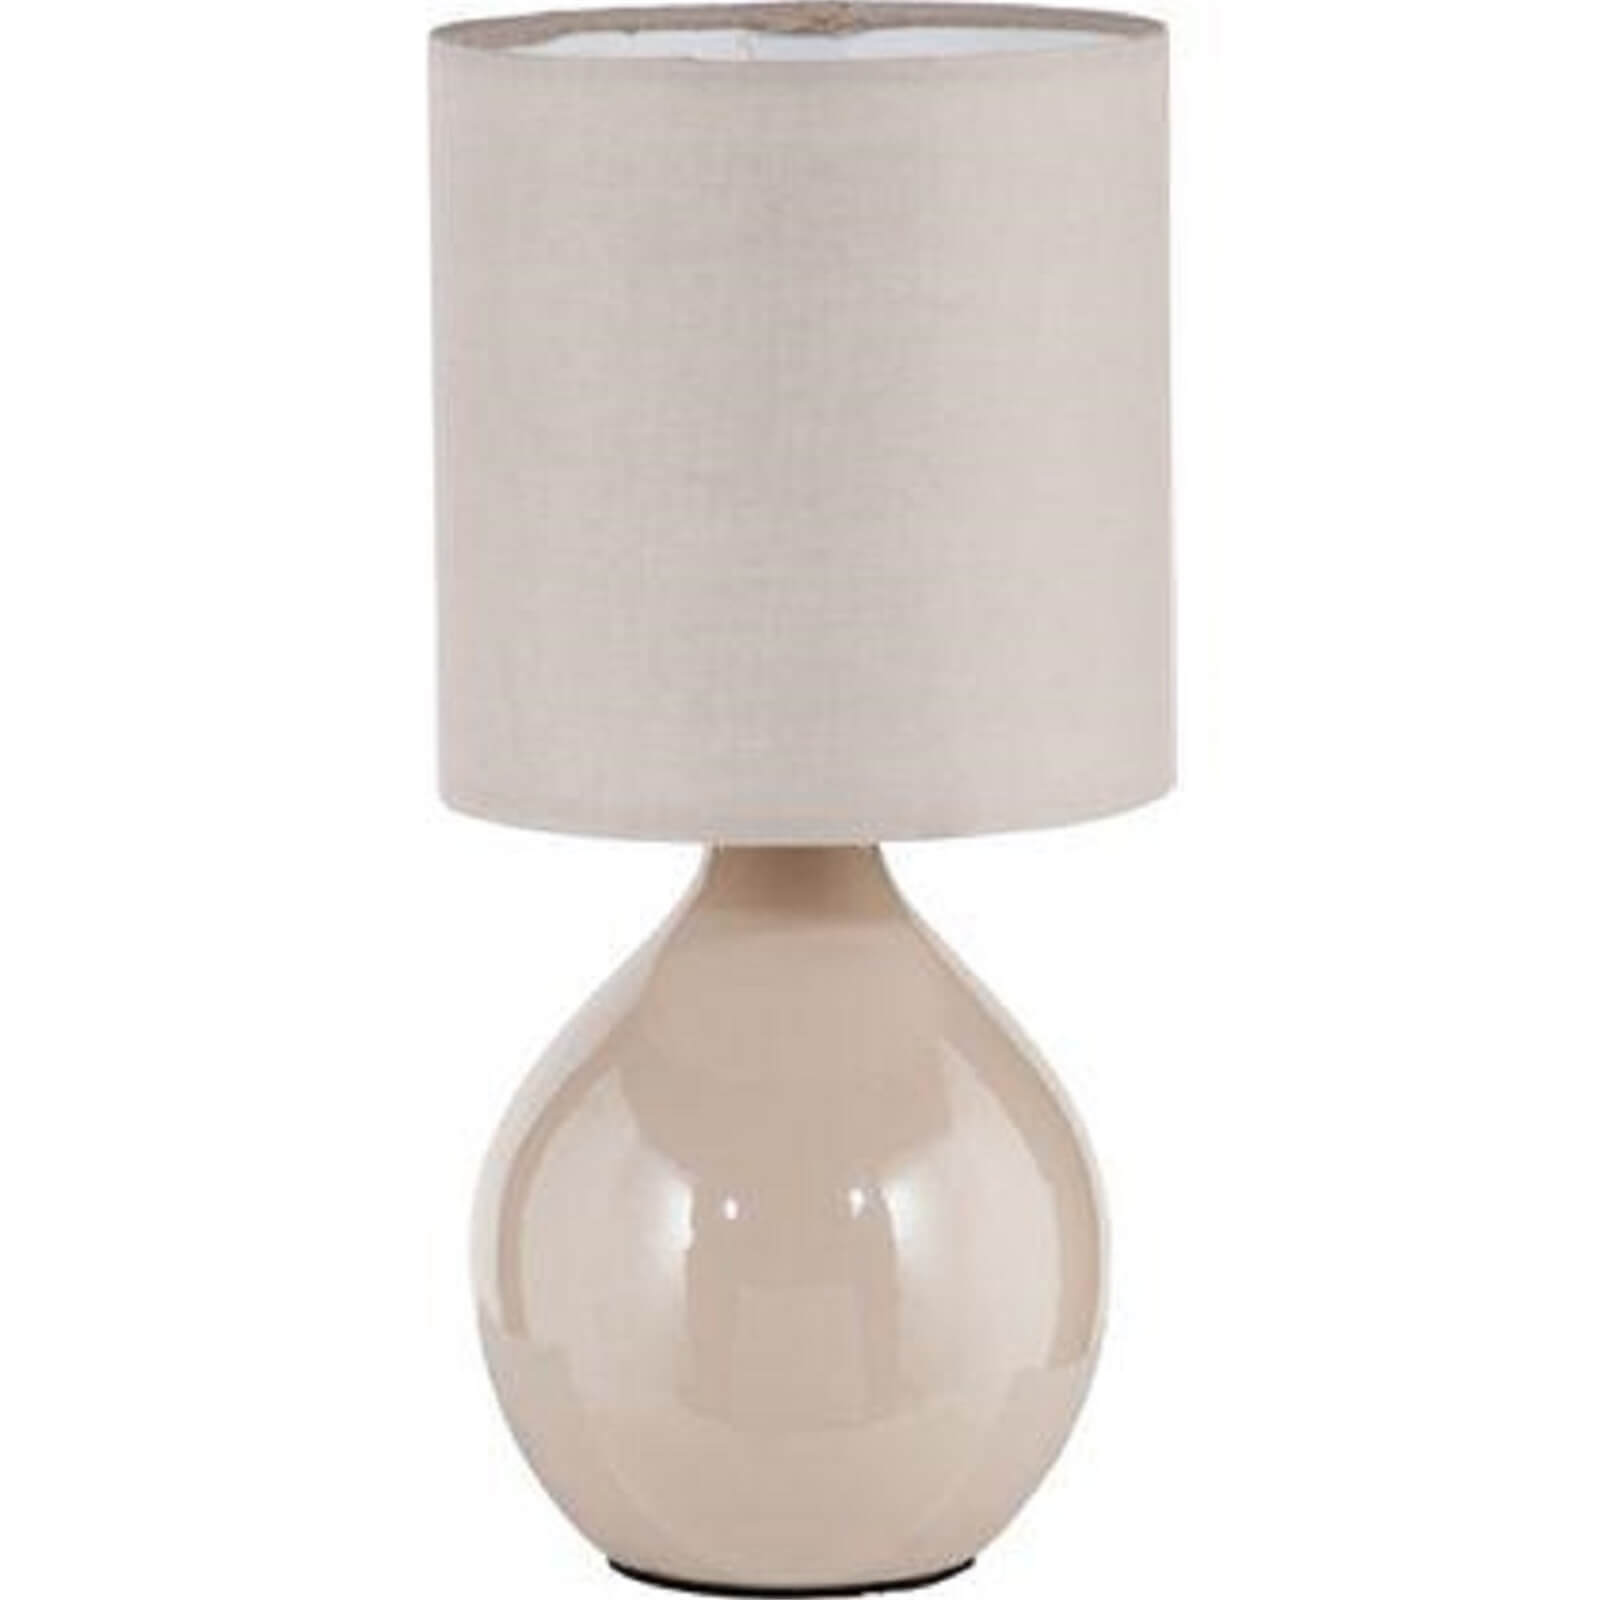 Photo of Mini Table Lamp - Cream